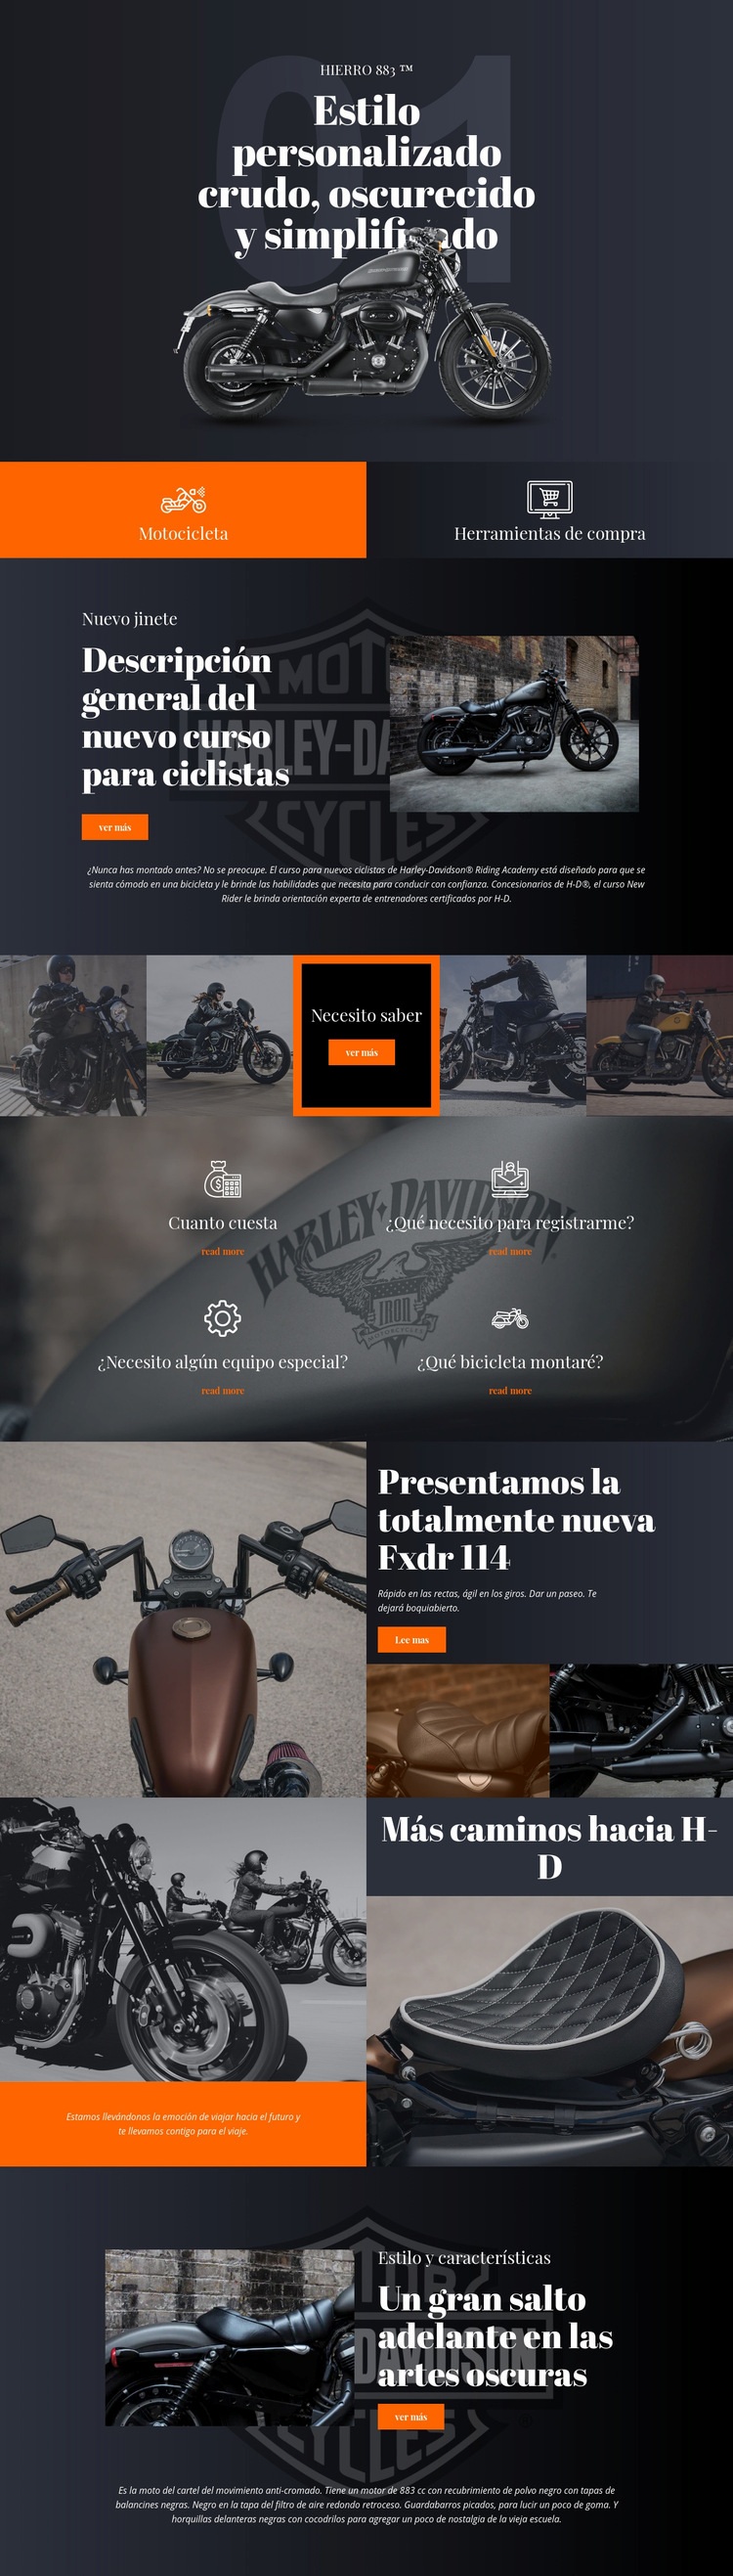 Harley Davidson Plantilla HTML5